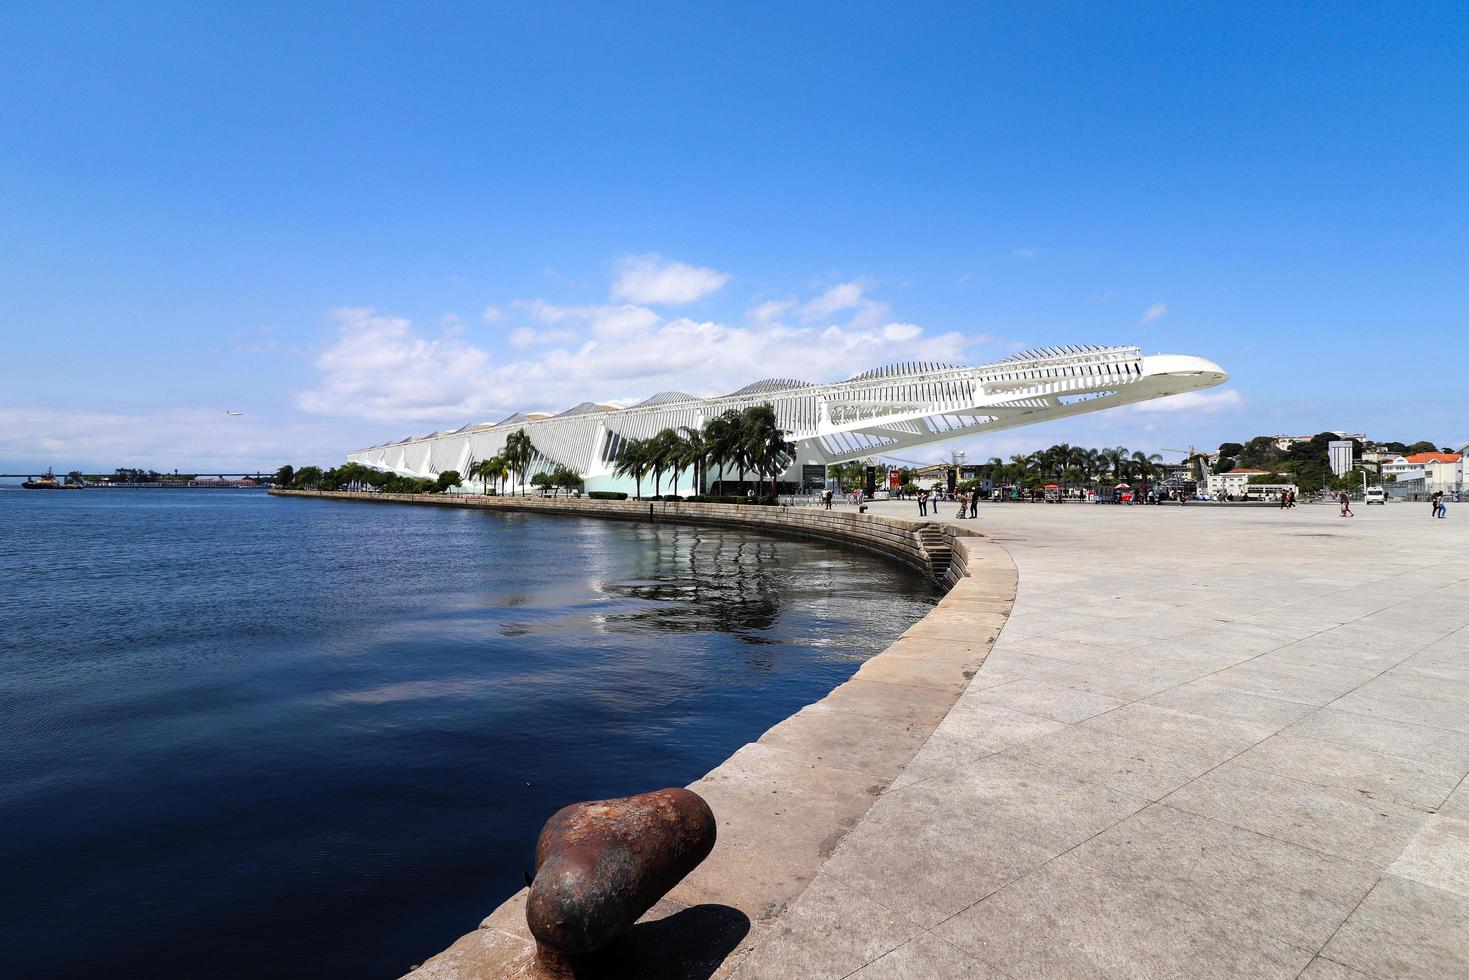 río de janeiro, rj, brasil, 2022 - museo del mañana, proyecto del arquitecto español santiago calatrava - plaza maua, distrito centro foto